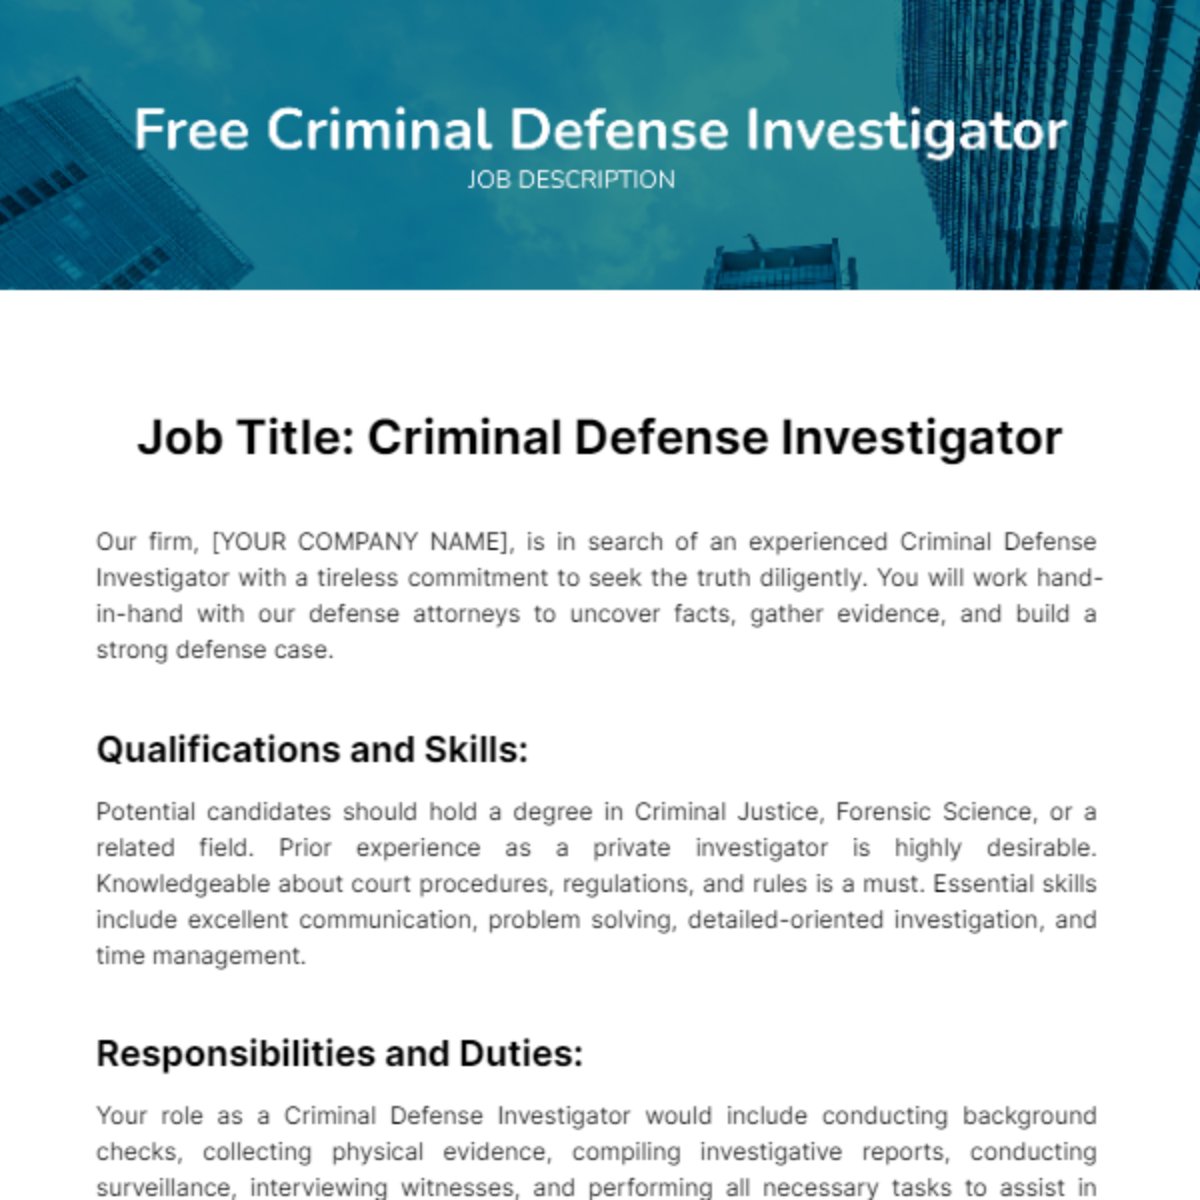 Free Criminal Defense Investigator Job Description Template